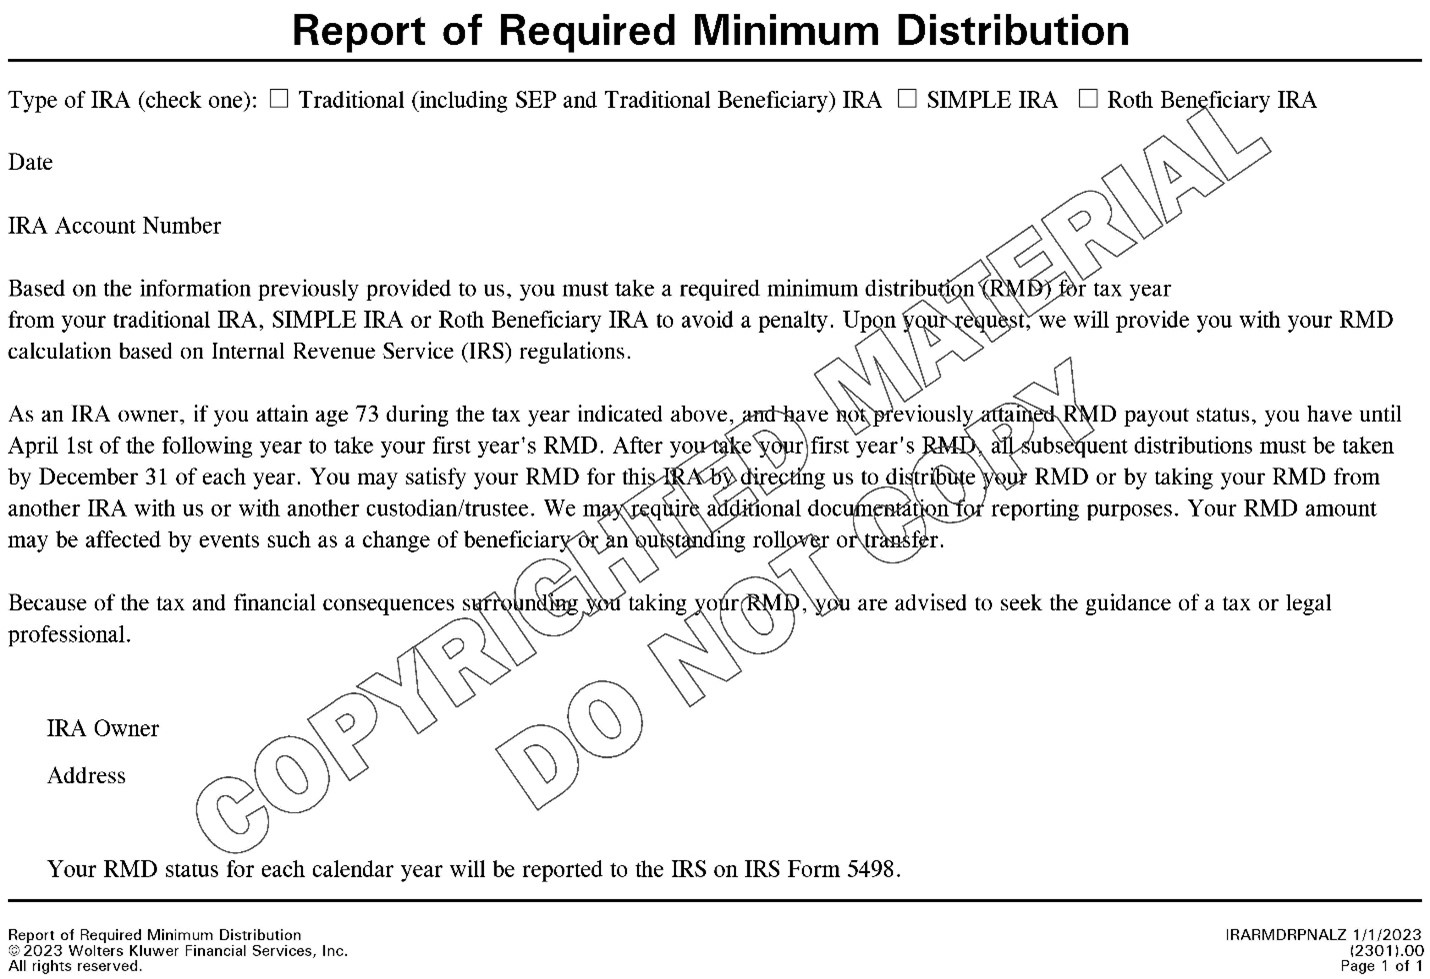 2023 Report of Required Minimum Distribution